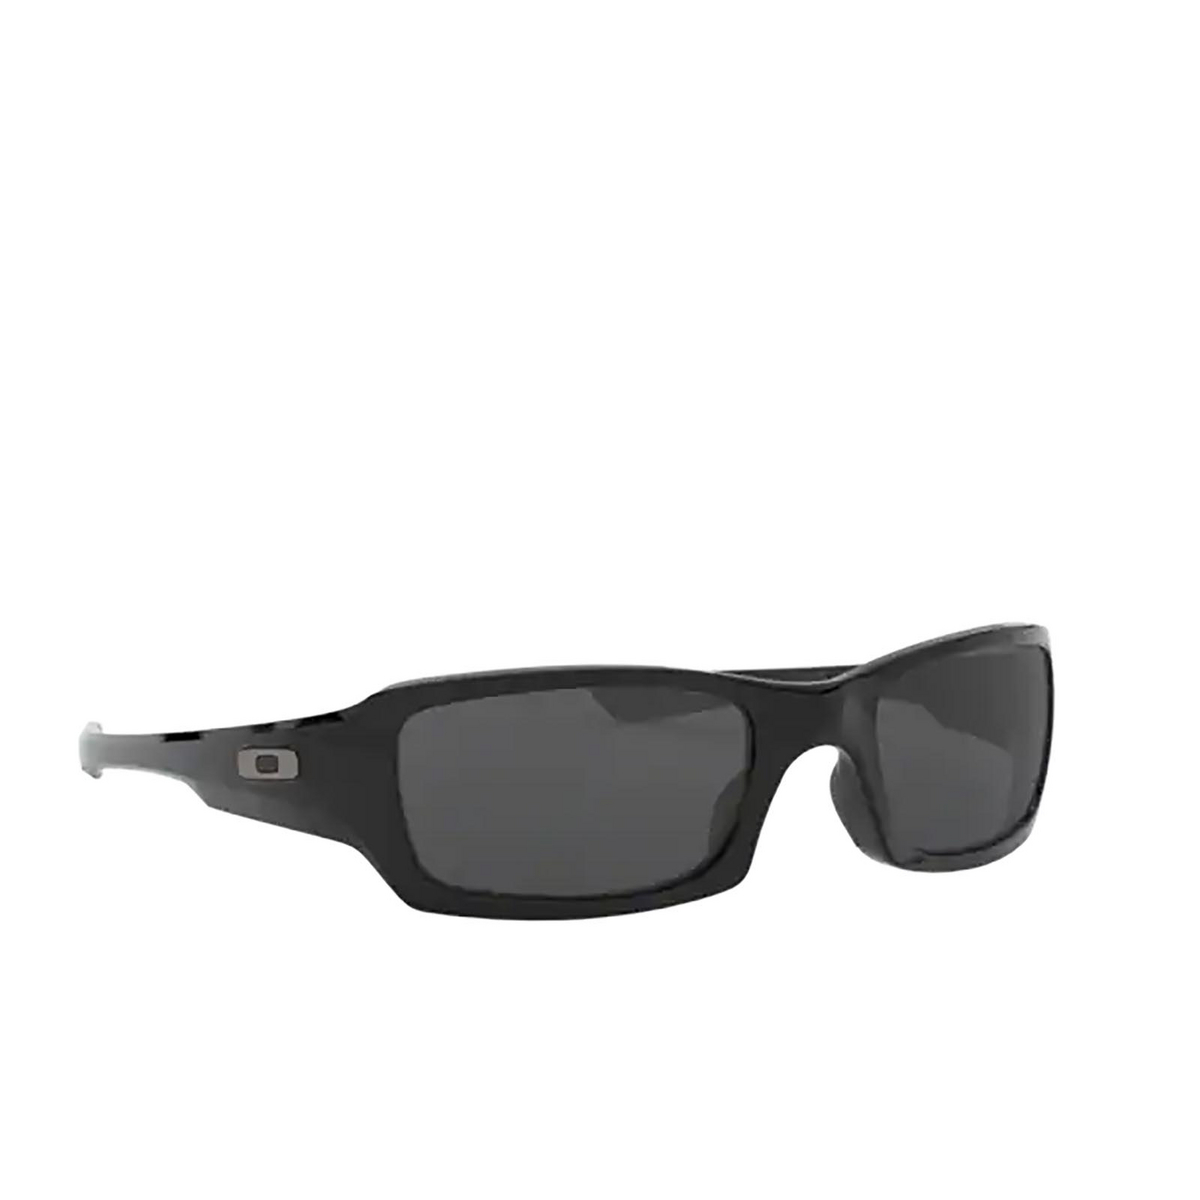 Oakley FIVES SQUARED Sunglasses 923804 Polished Black - three-quarters view